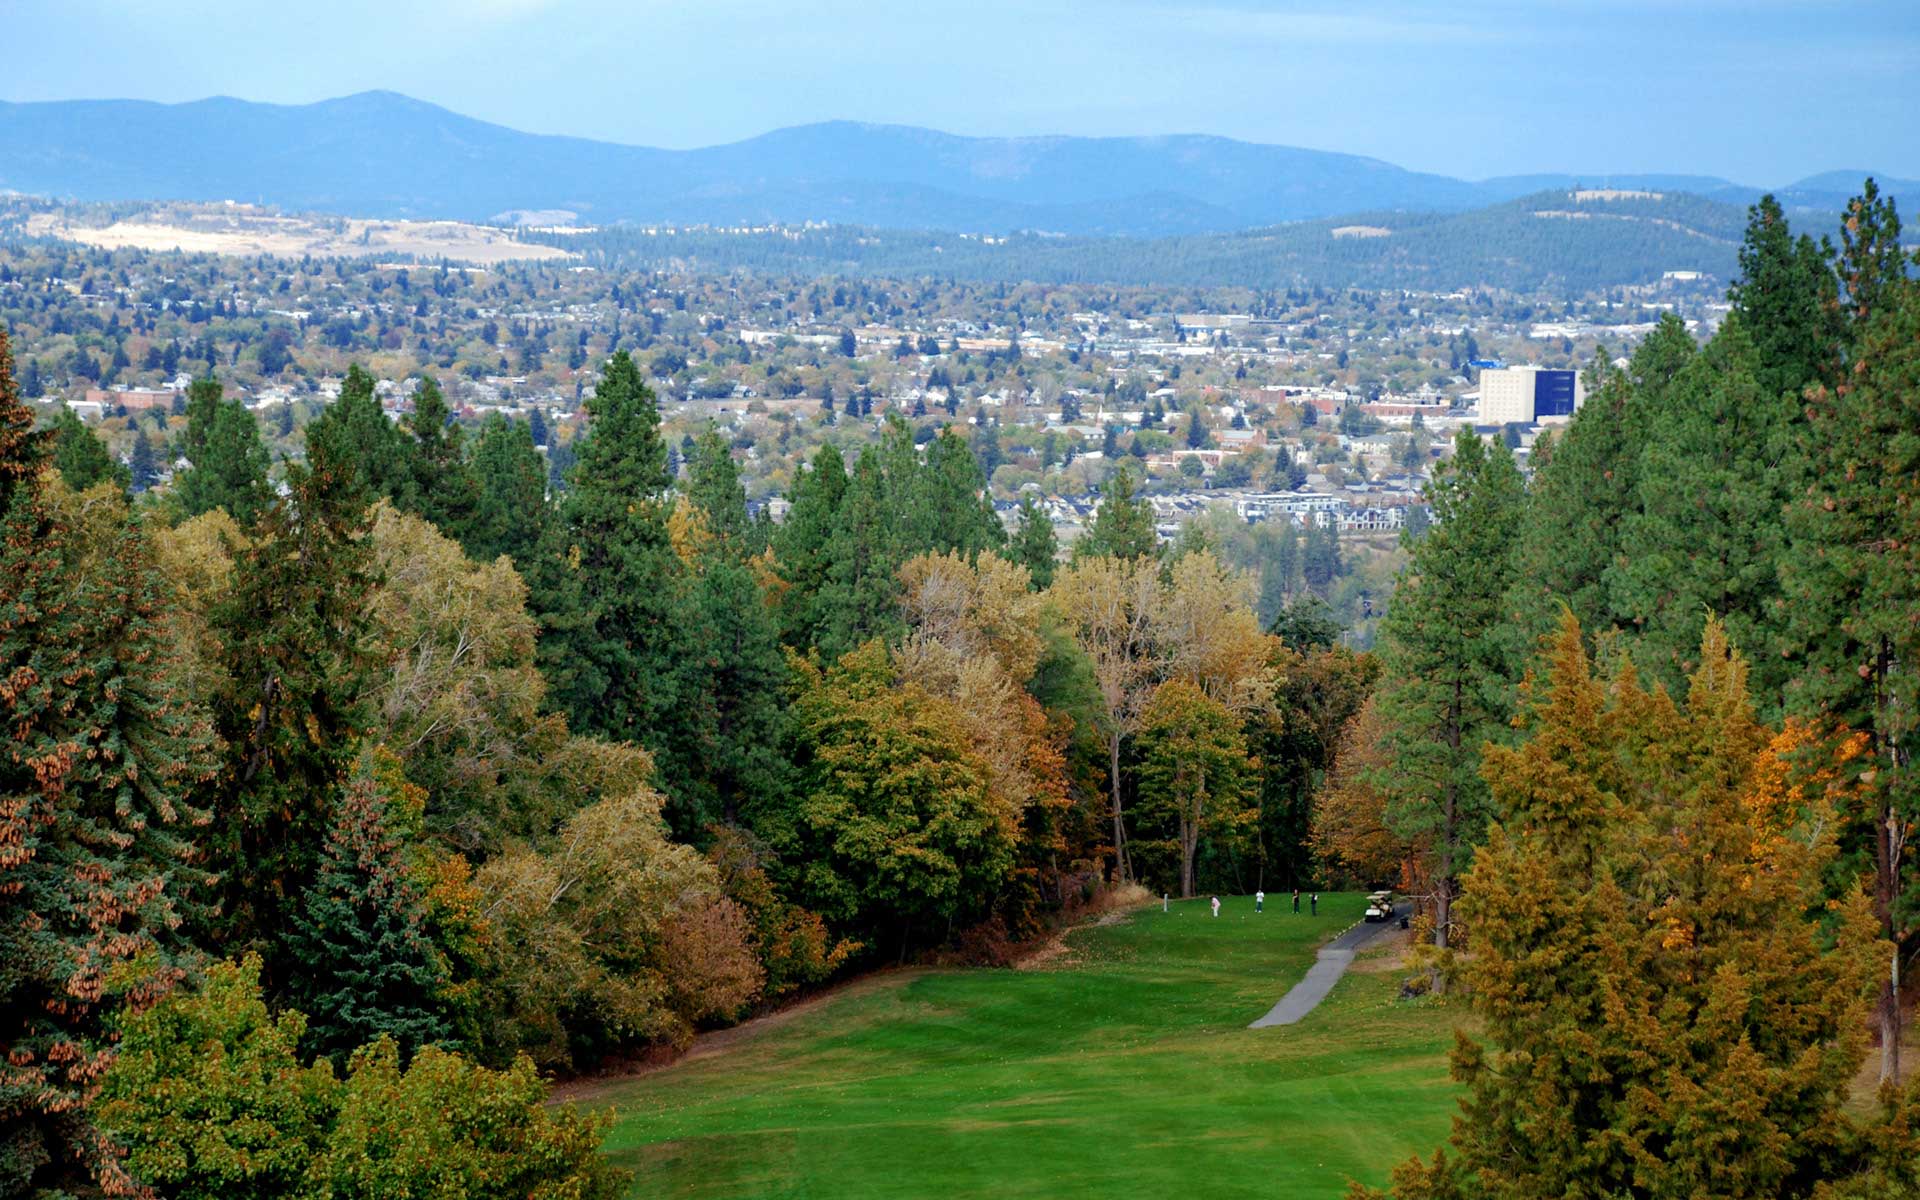 Golf Photos Gallery - City of Spokane, Washington